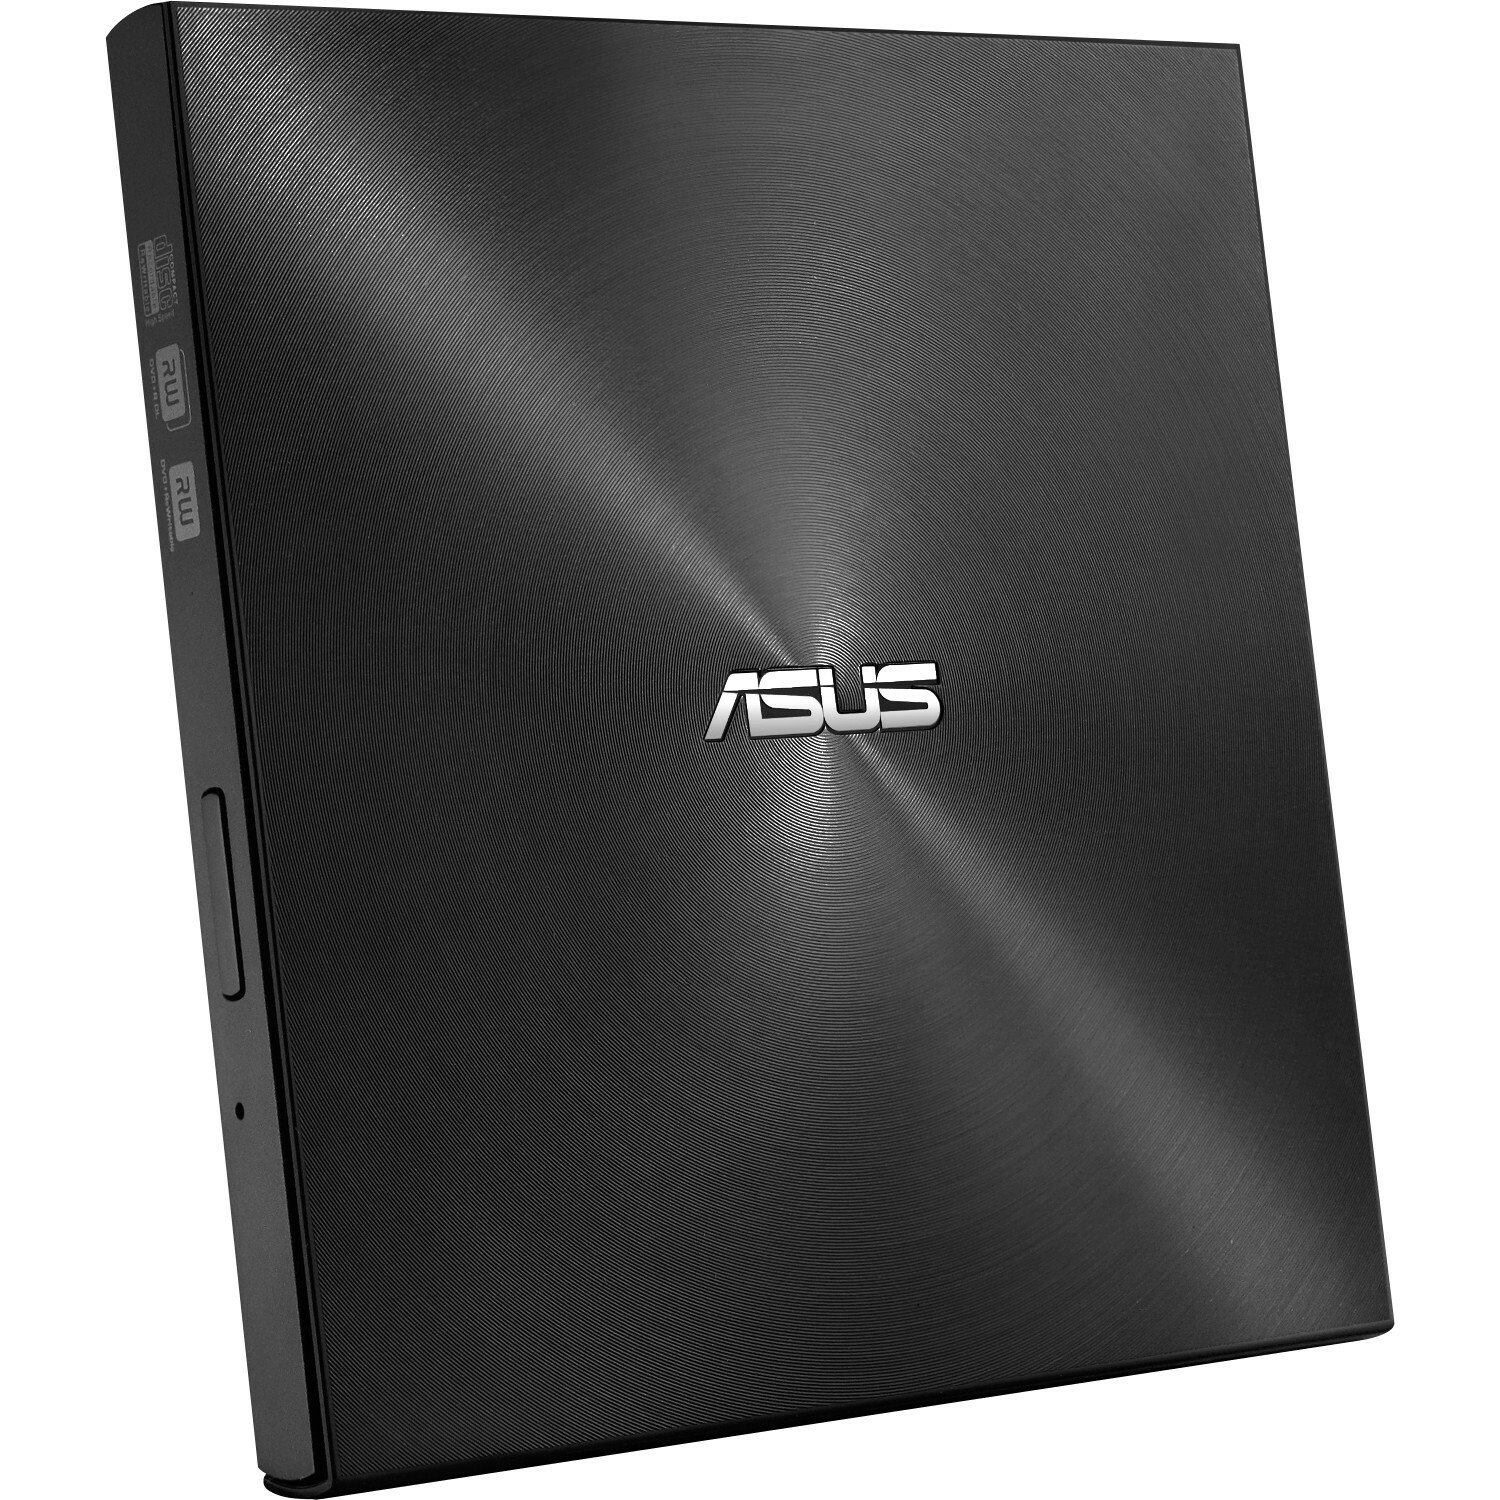 Asus ZenDrive DVD-Writer - External - Retail Pack - Black